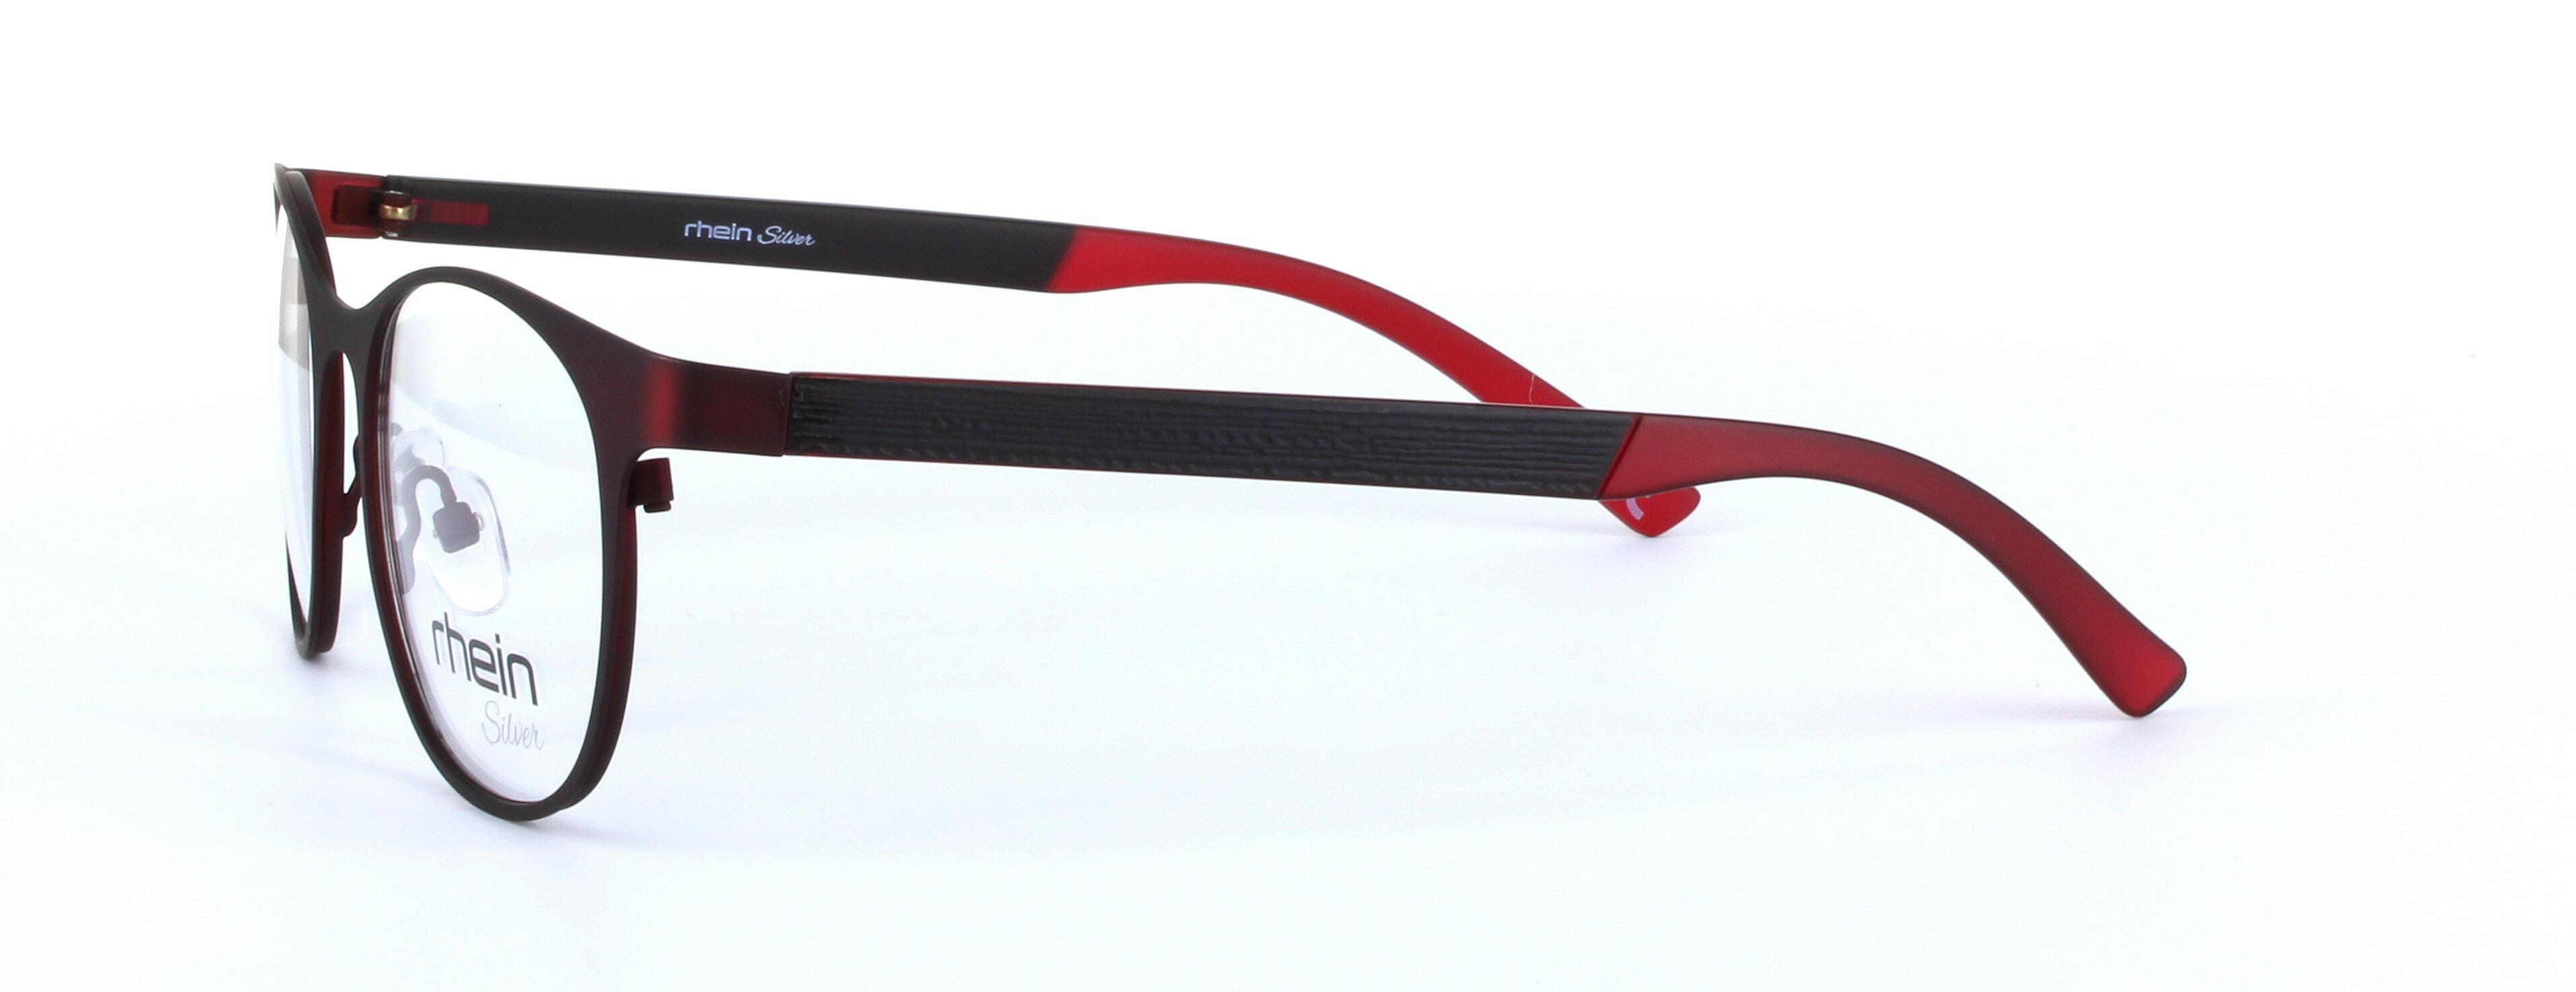 Isra Red Full Rim Round Metal Glasses - Image View 2